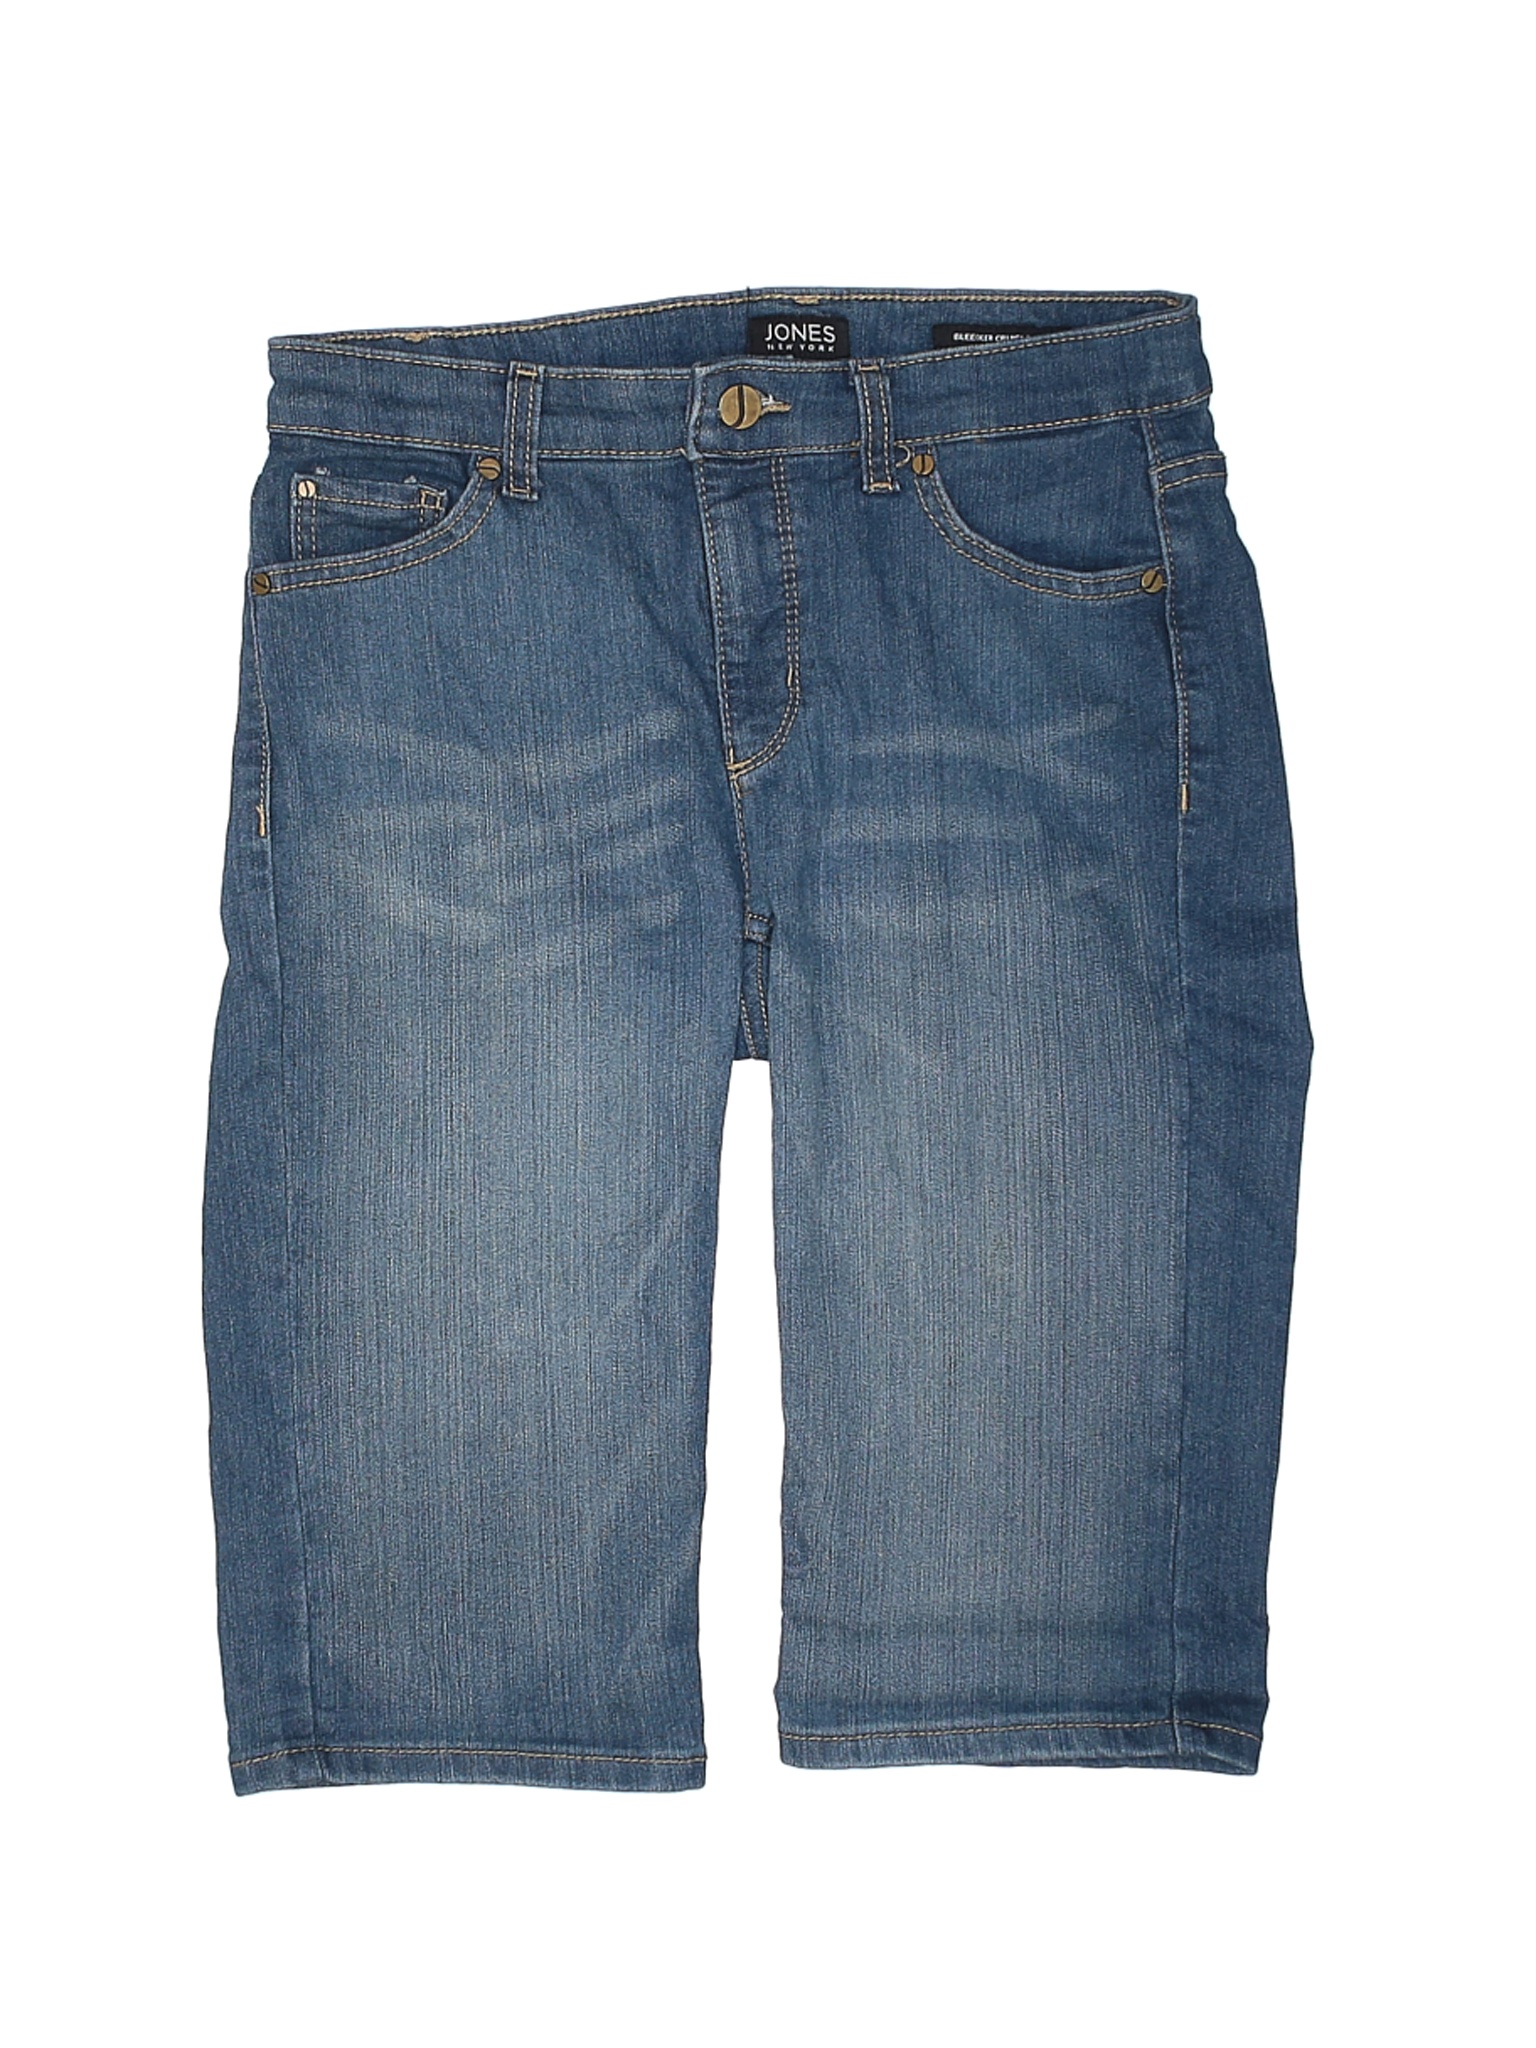 Jones New York Women Blue Denim Shorts 4 | eBay